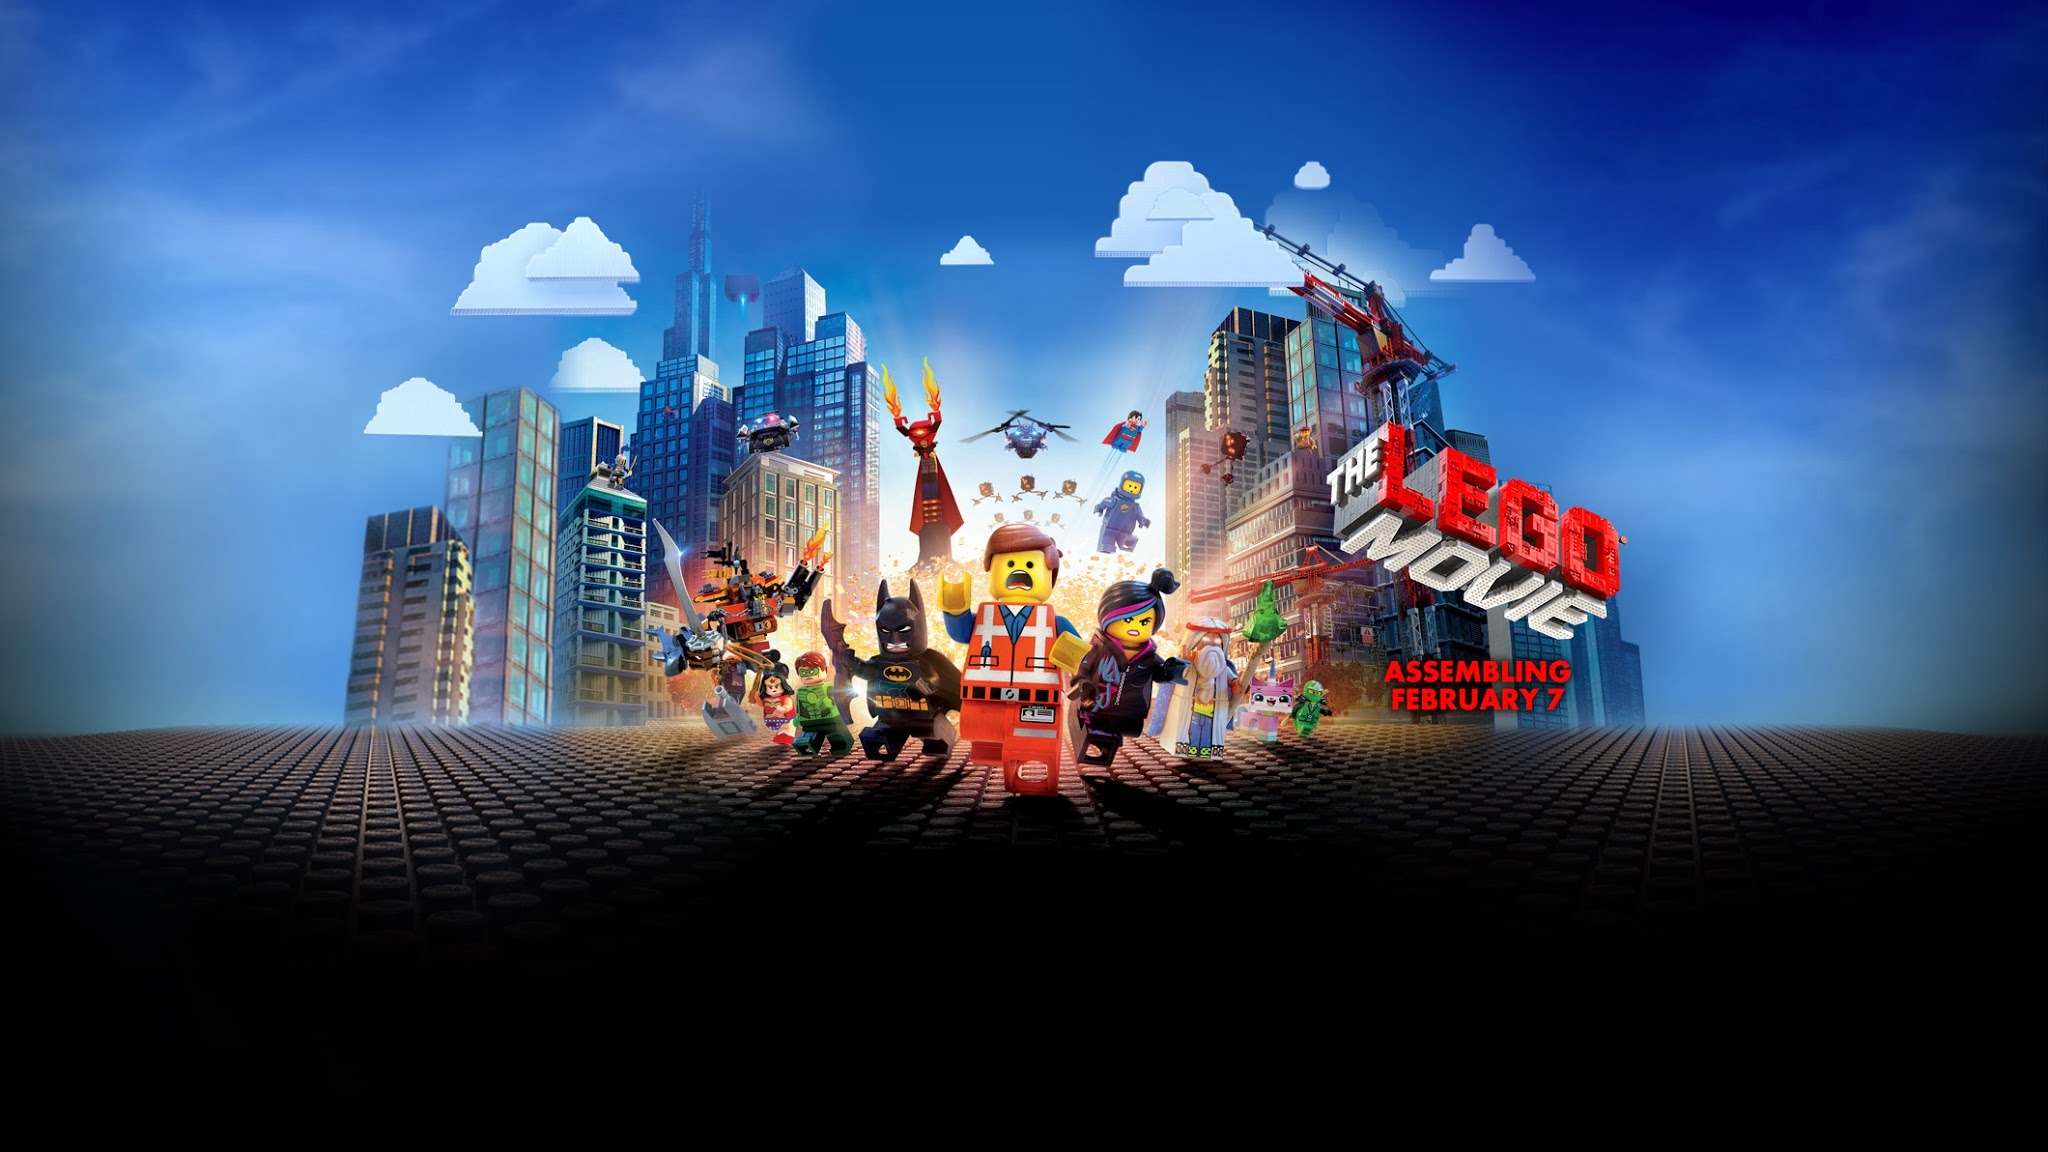 Lego Movie Wallpaper